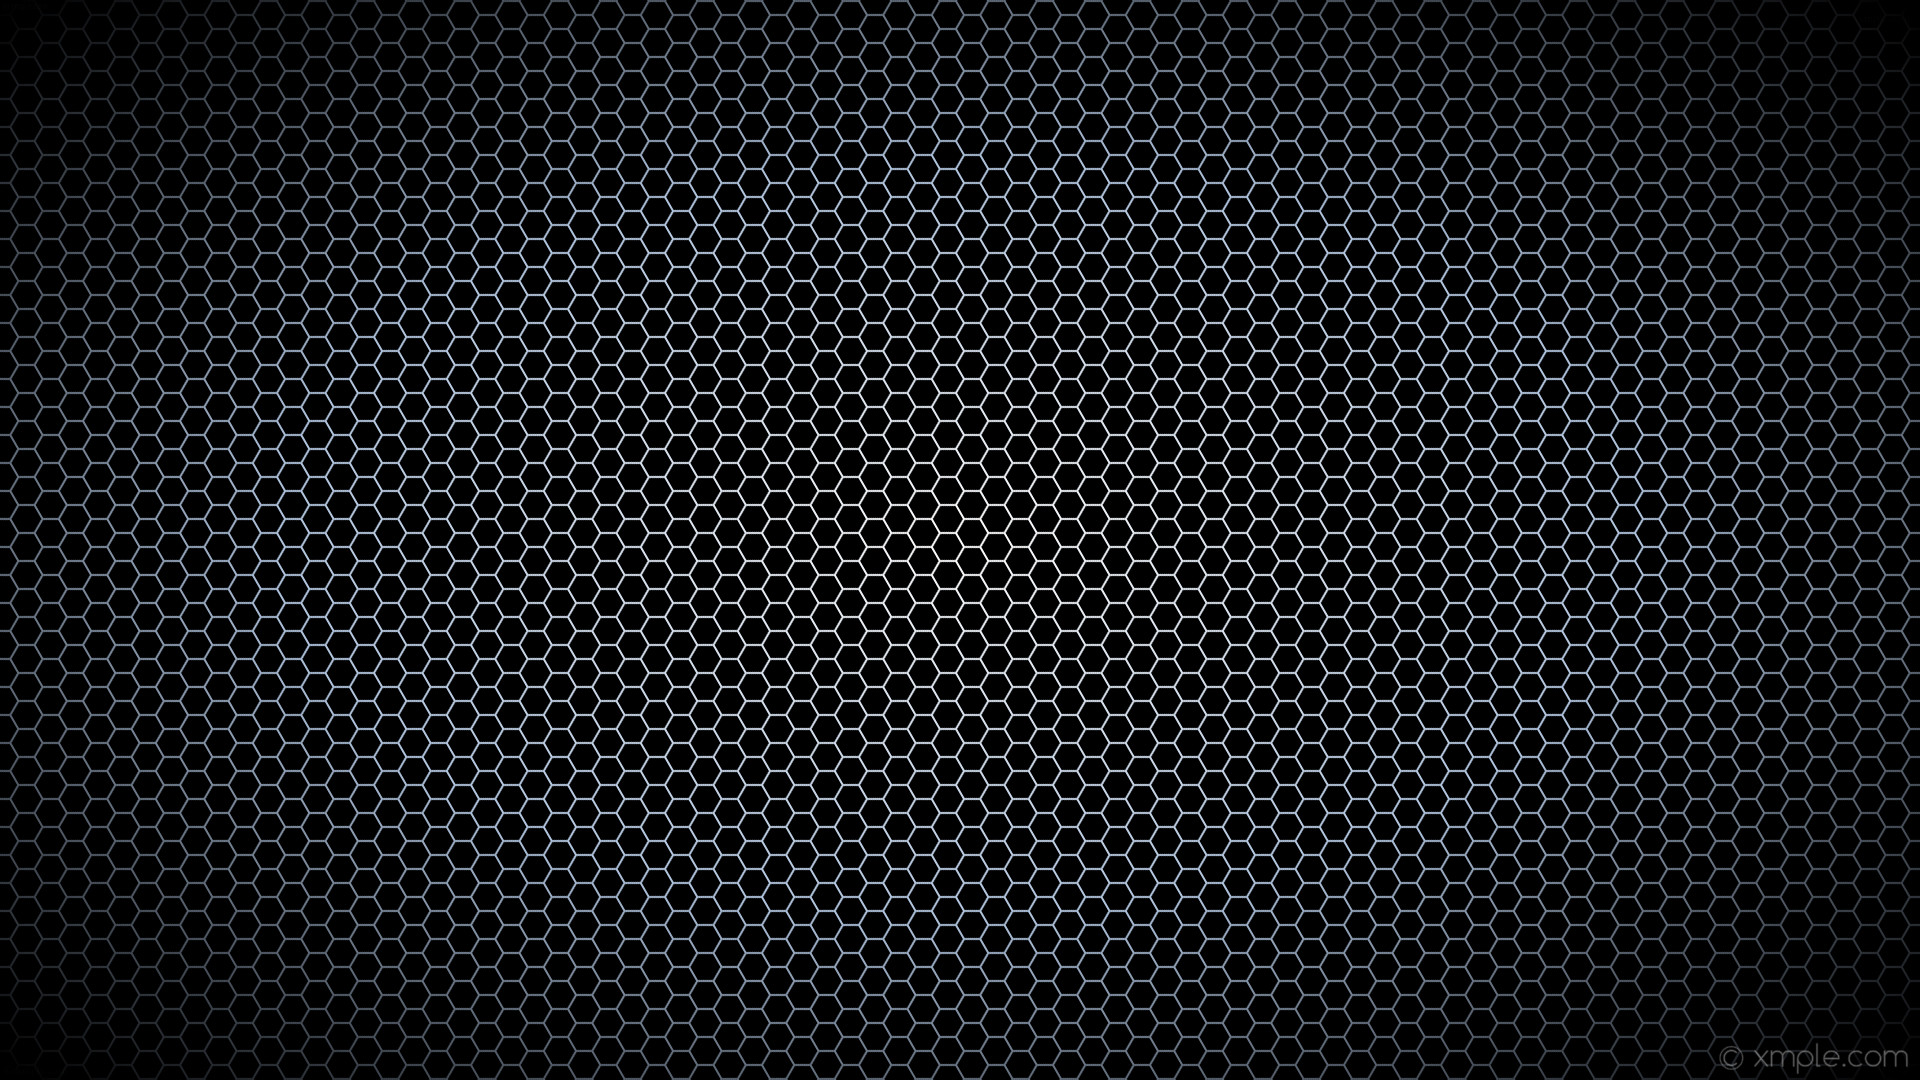 1920x1080 wallpaper black hexagon glow white blue gradient light steel blue #000000  #ffffff #b0c4de